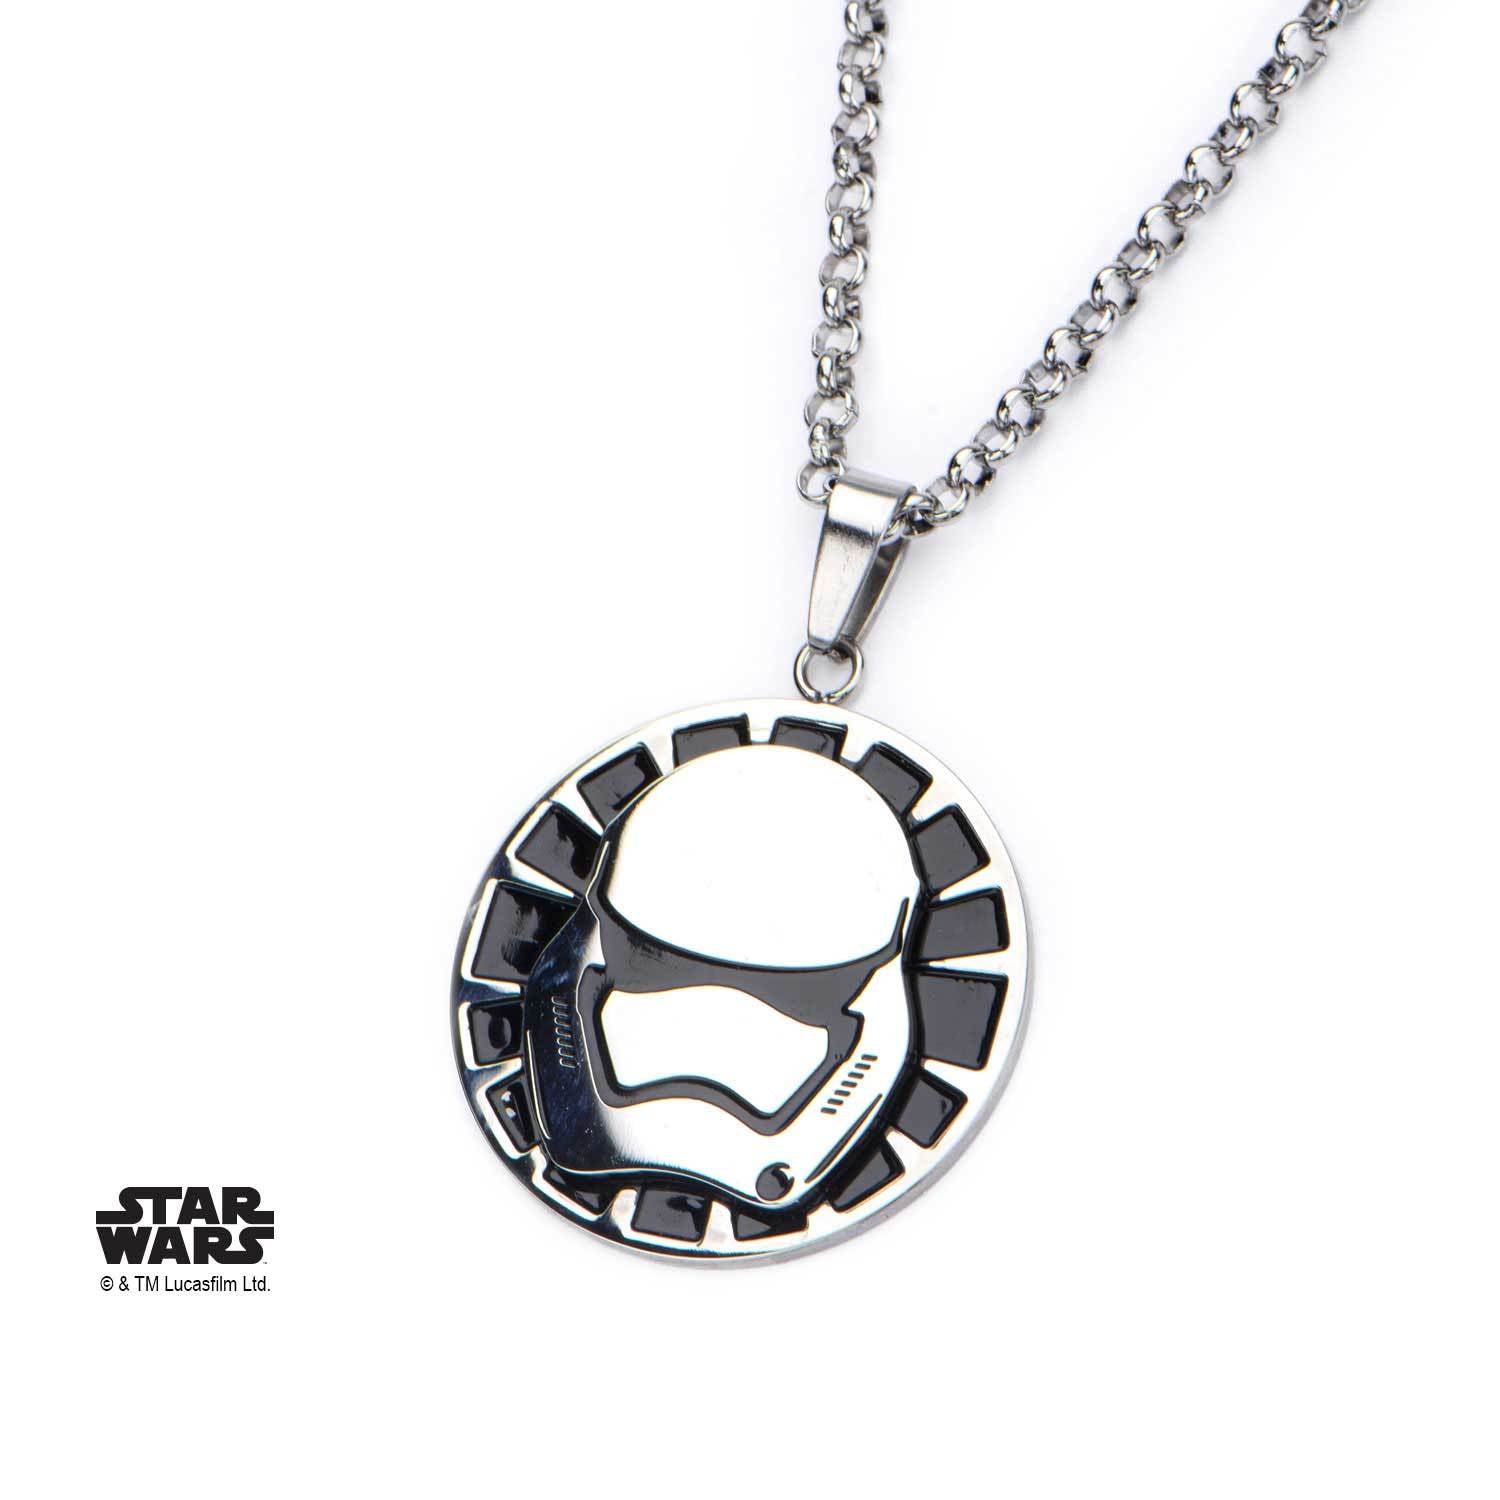 Star Wars Episode 7 Stormtrooper Pendant Necklace